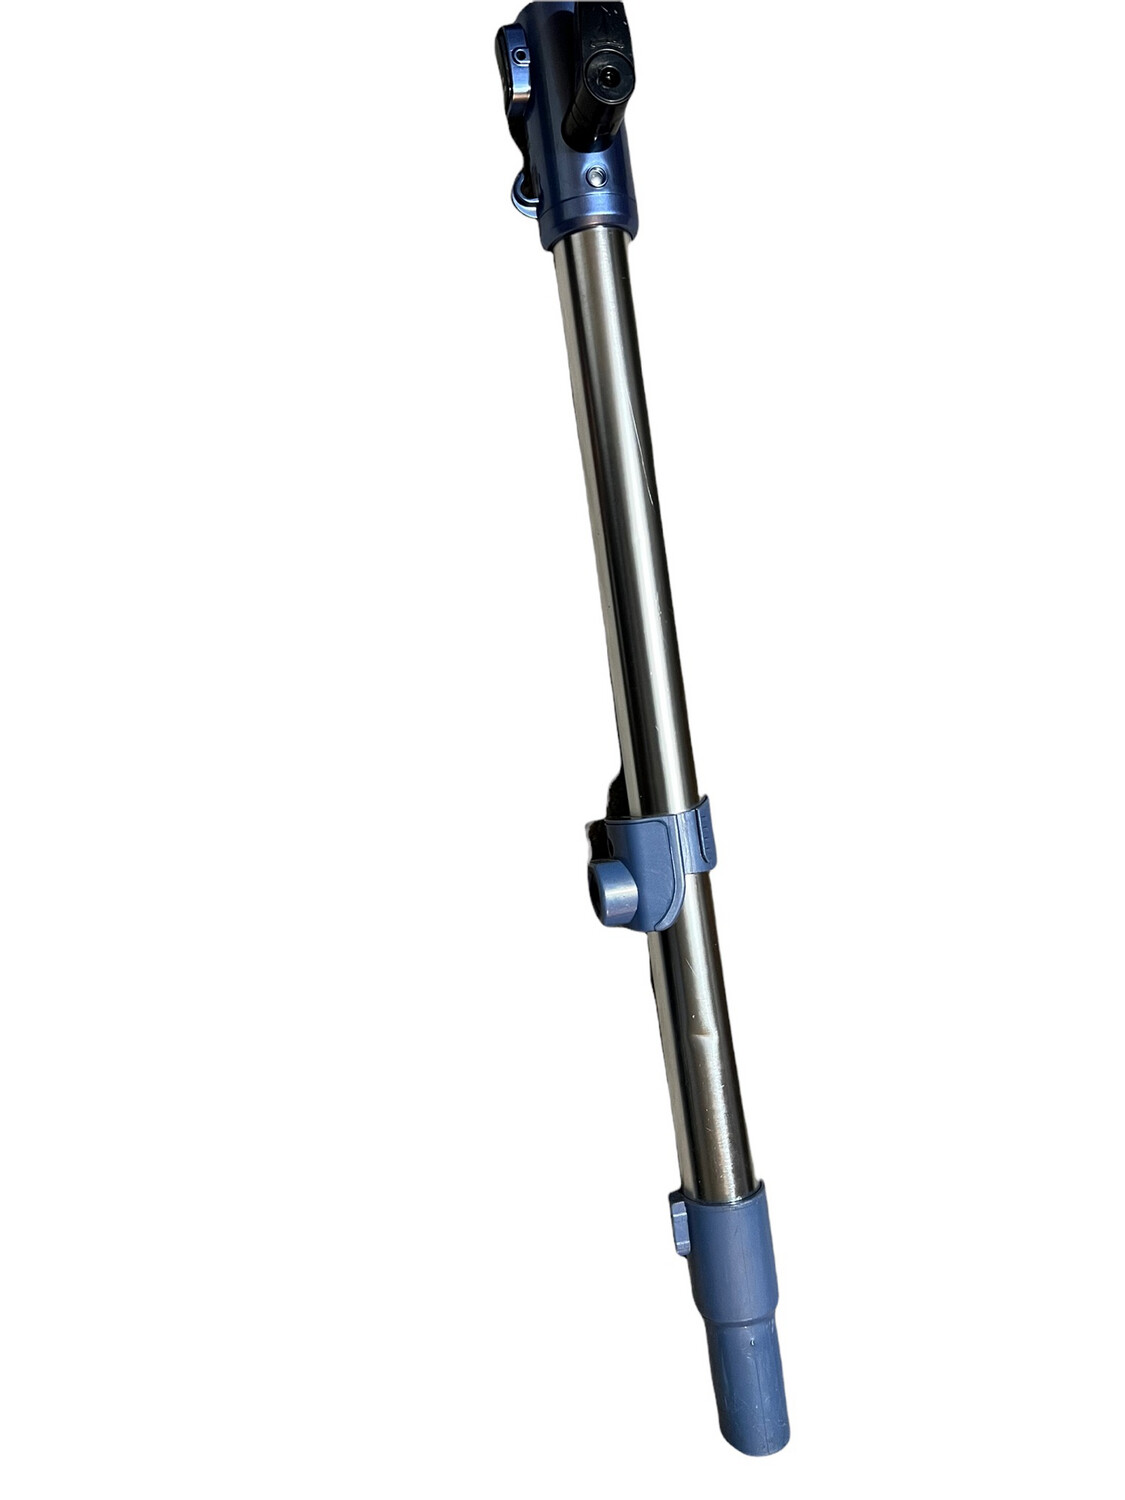 Shark rotator NV 642 extension wand tube(preowned)